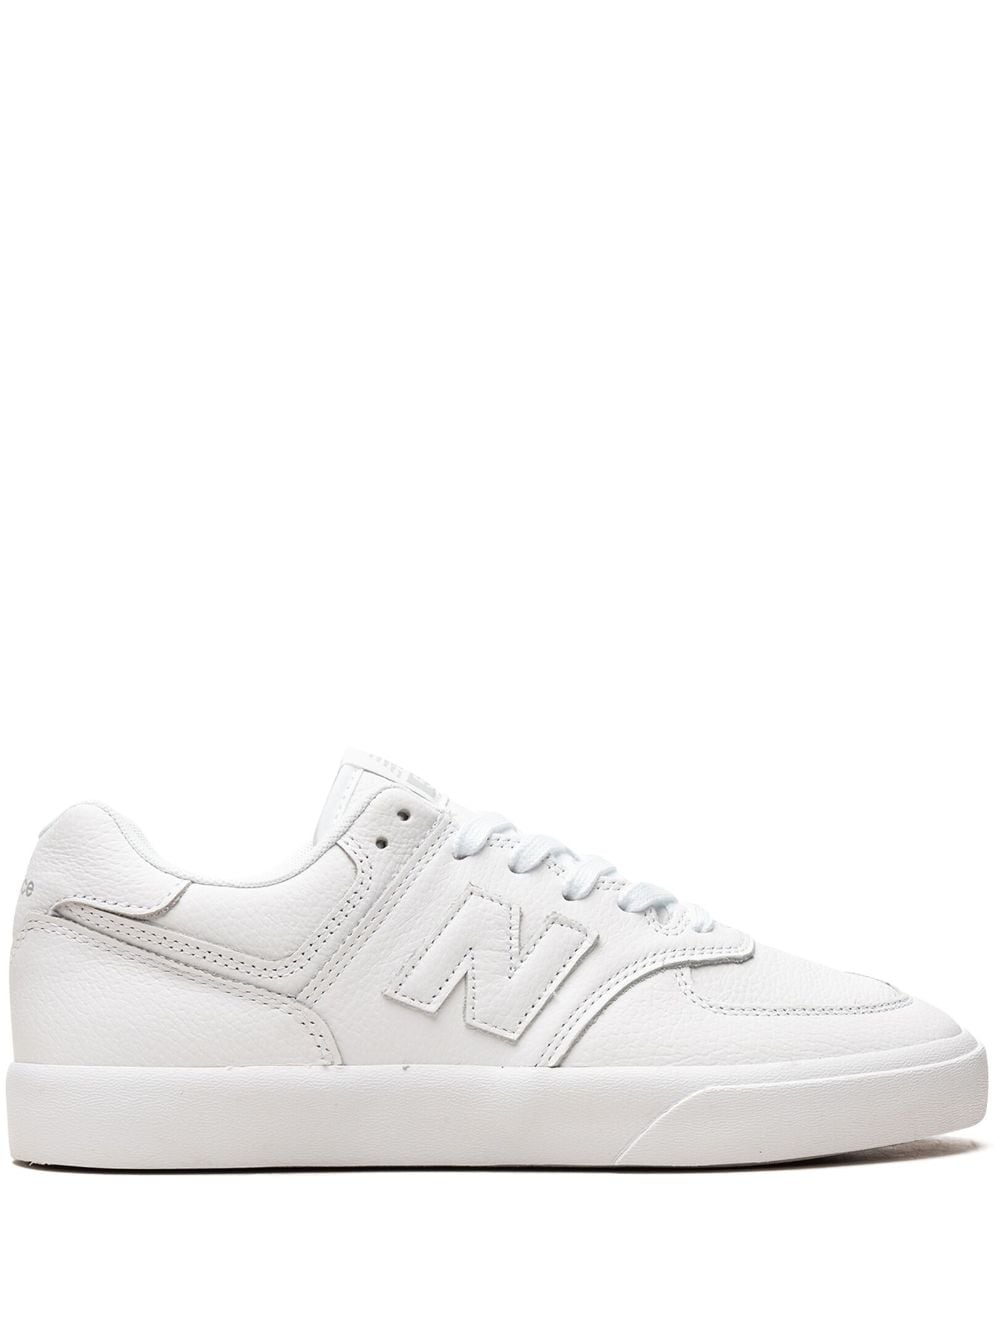 New Balance 574 "Triple White" sneakers